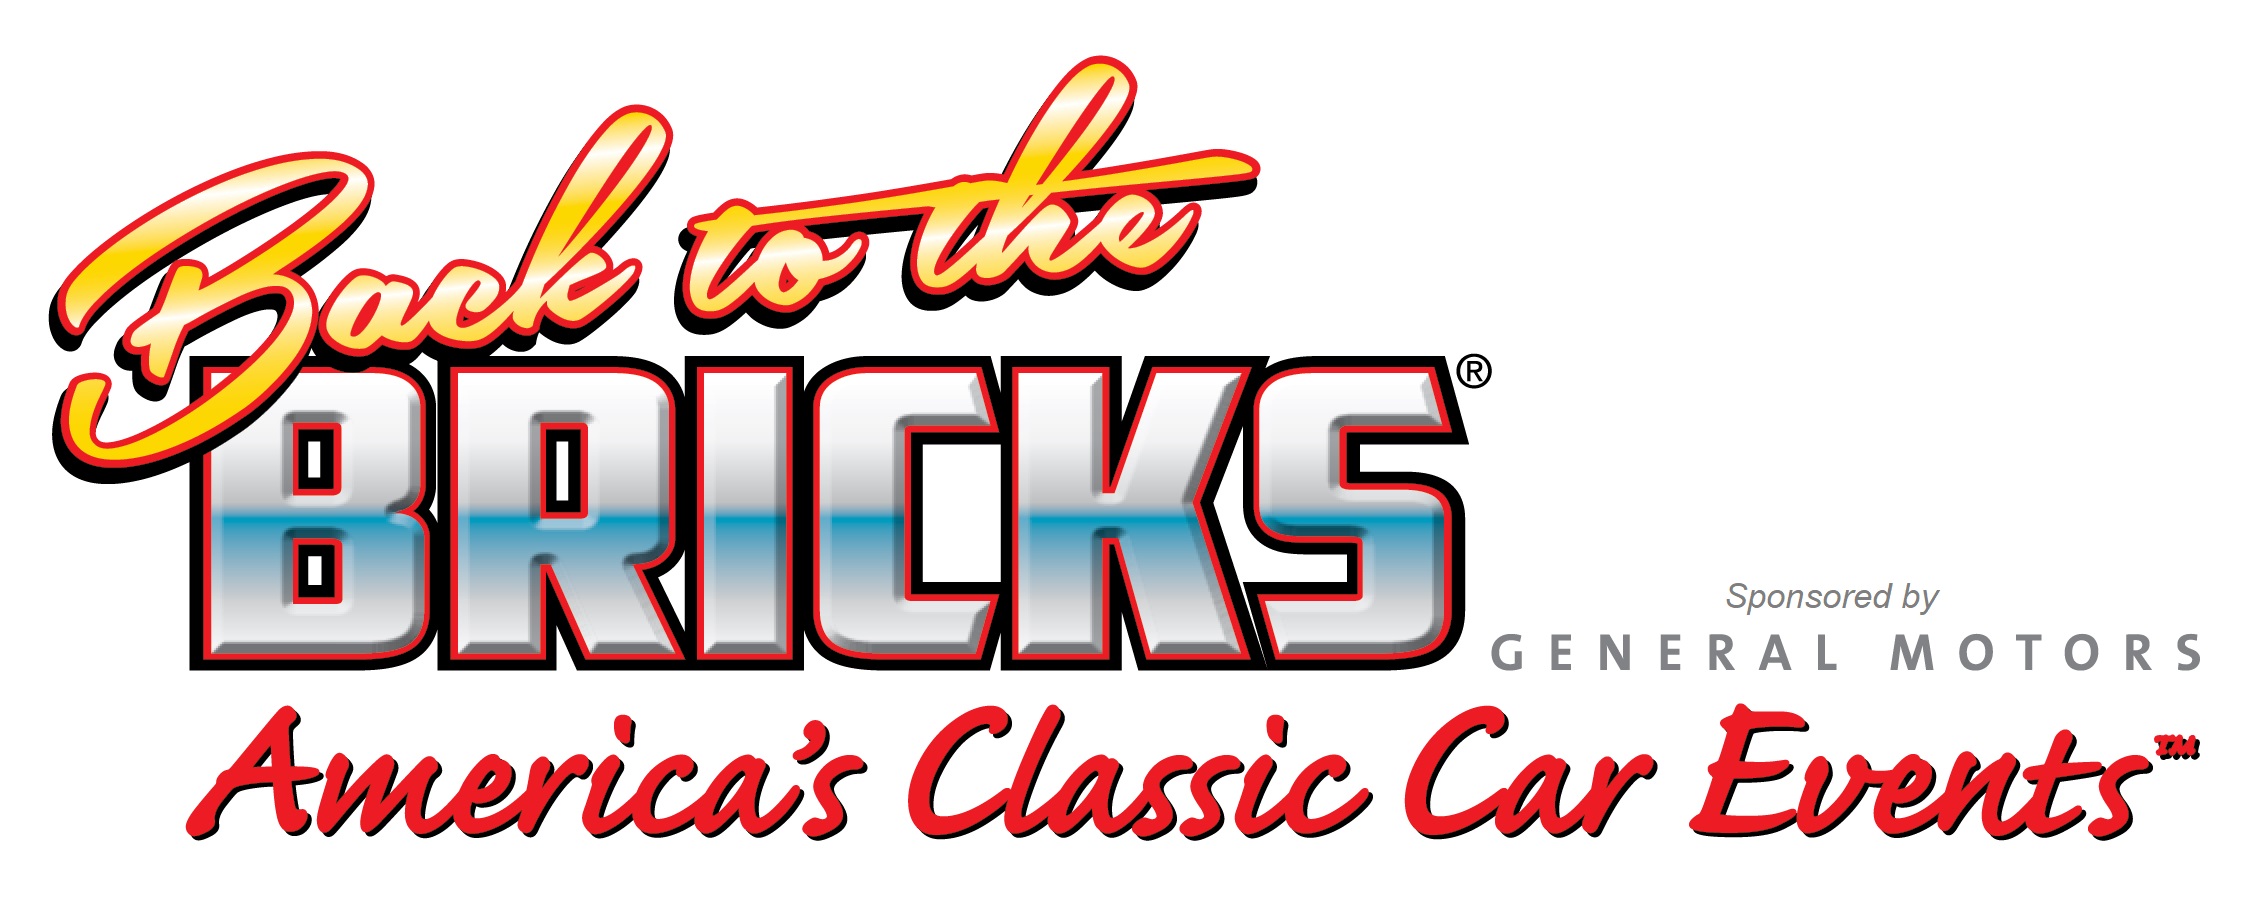 Back to the Bricks logo